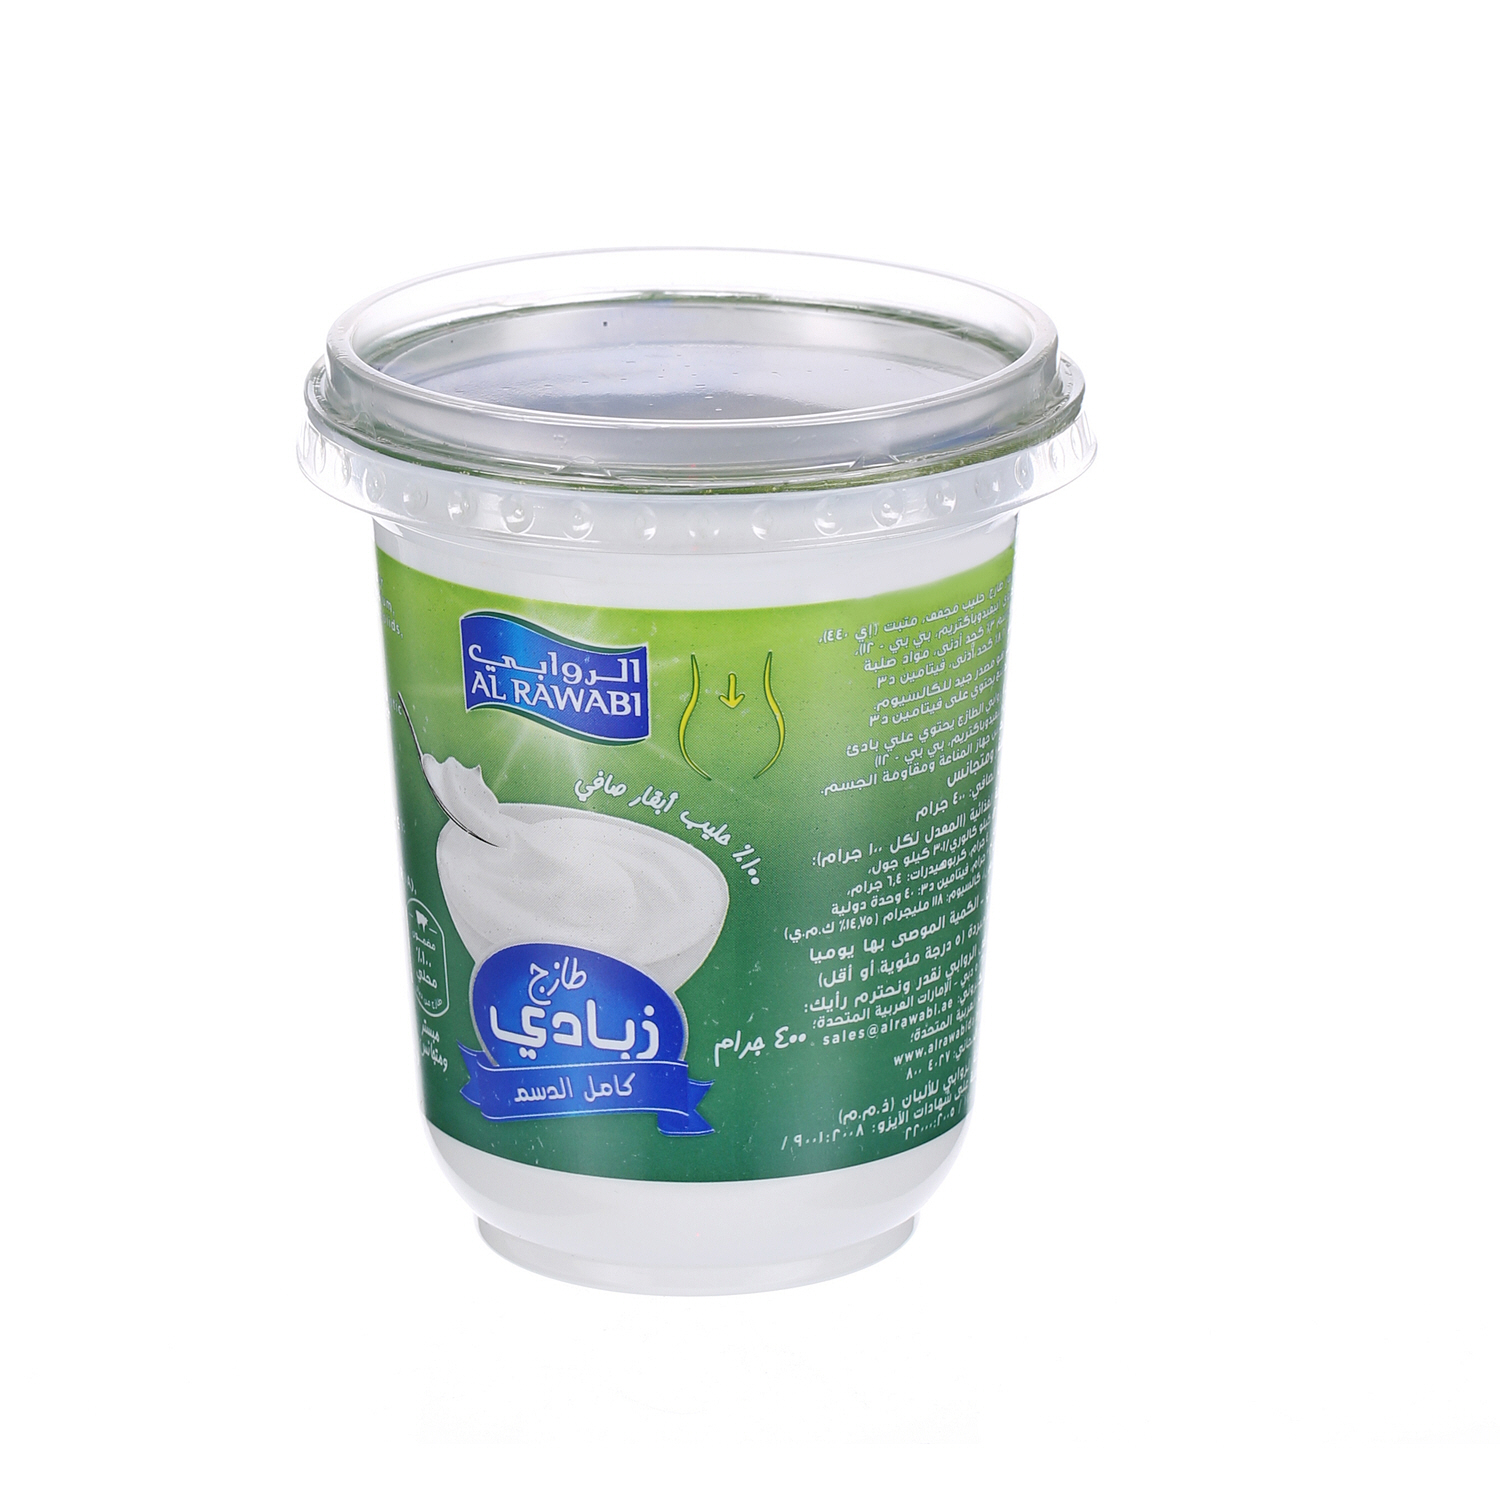 Al Rawabi Fresh Yoghurt Full Fat 400 g